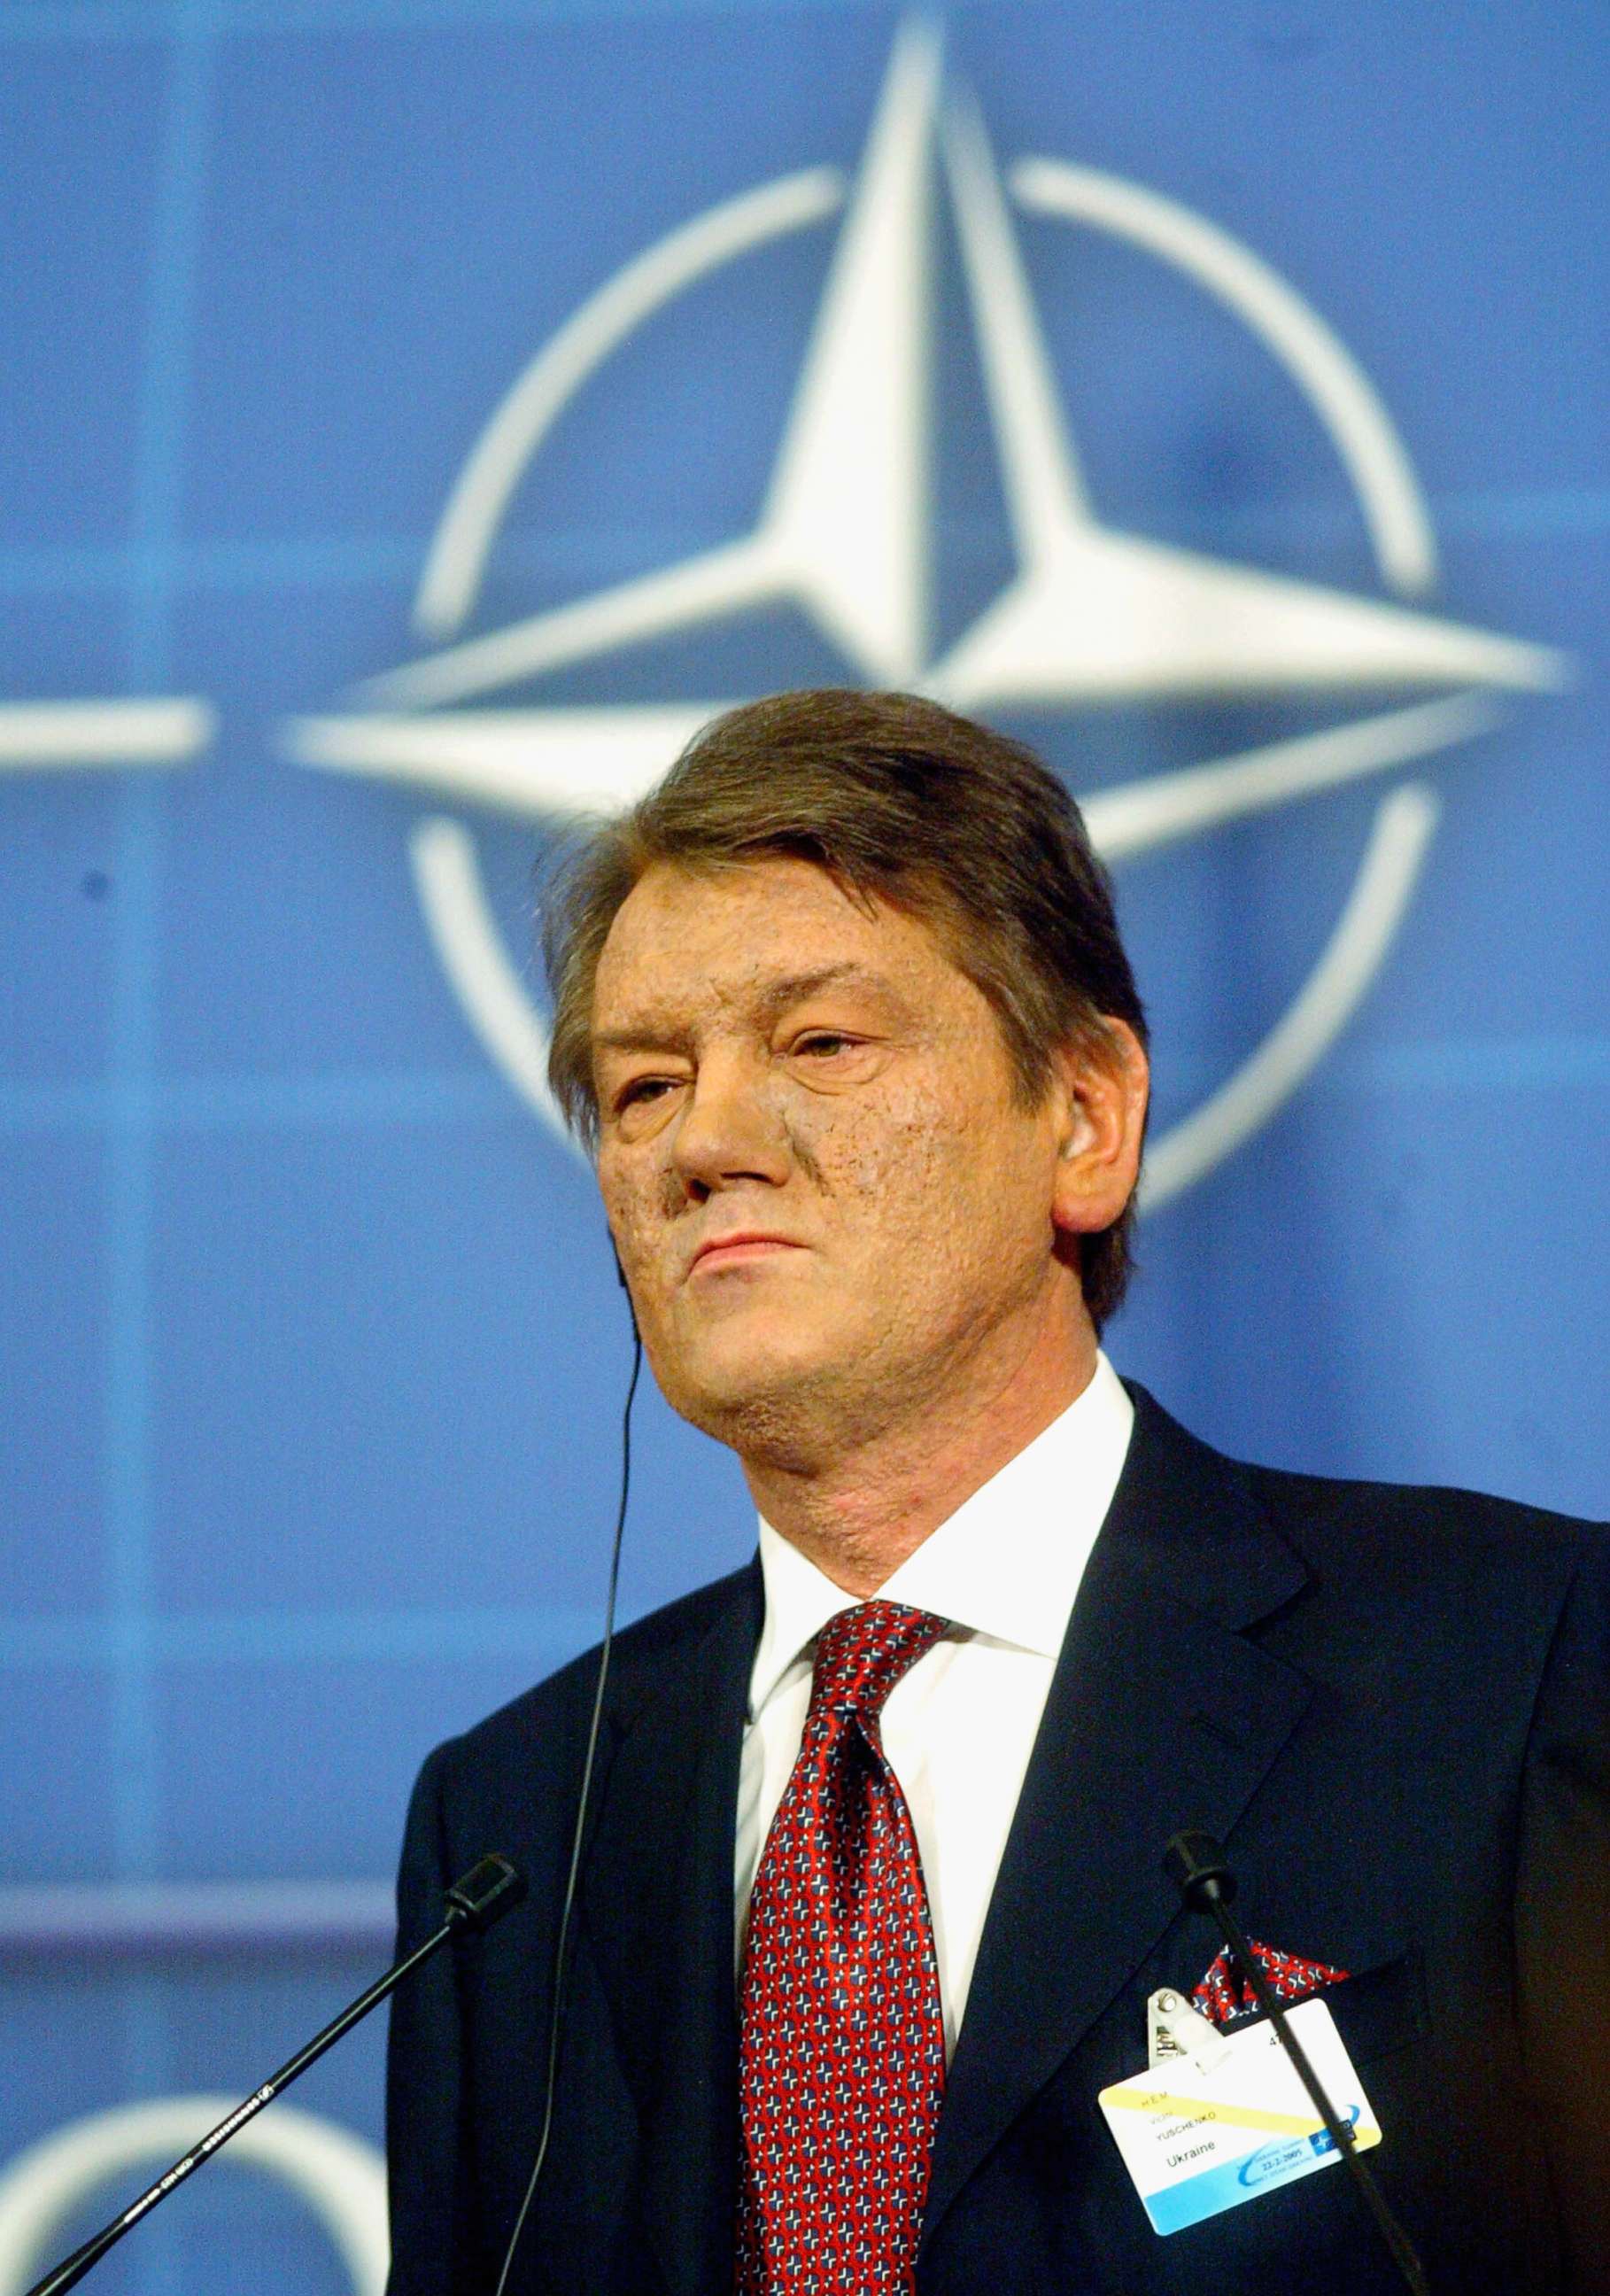 PHOTO: Ukrainian Prime Minister Viktor Yushchenko speaks at the Nato summit, Feb. 22, 2005 in Brussels, Belgium.